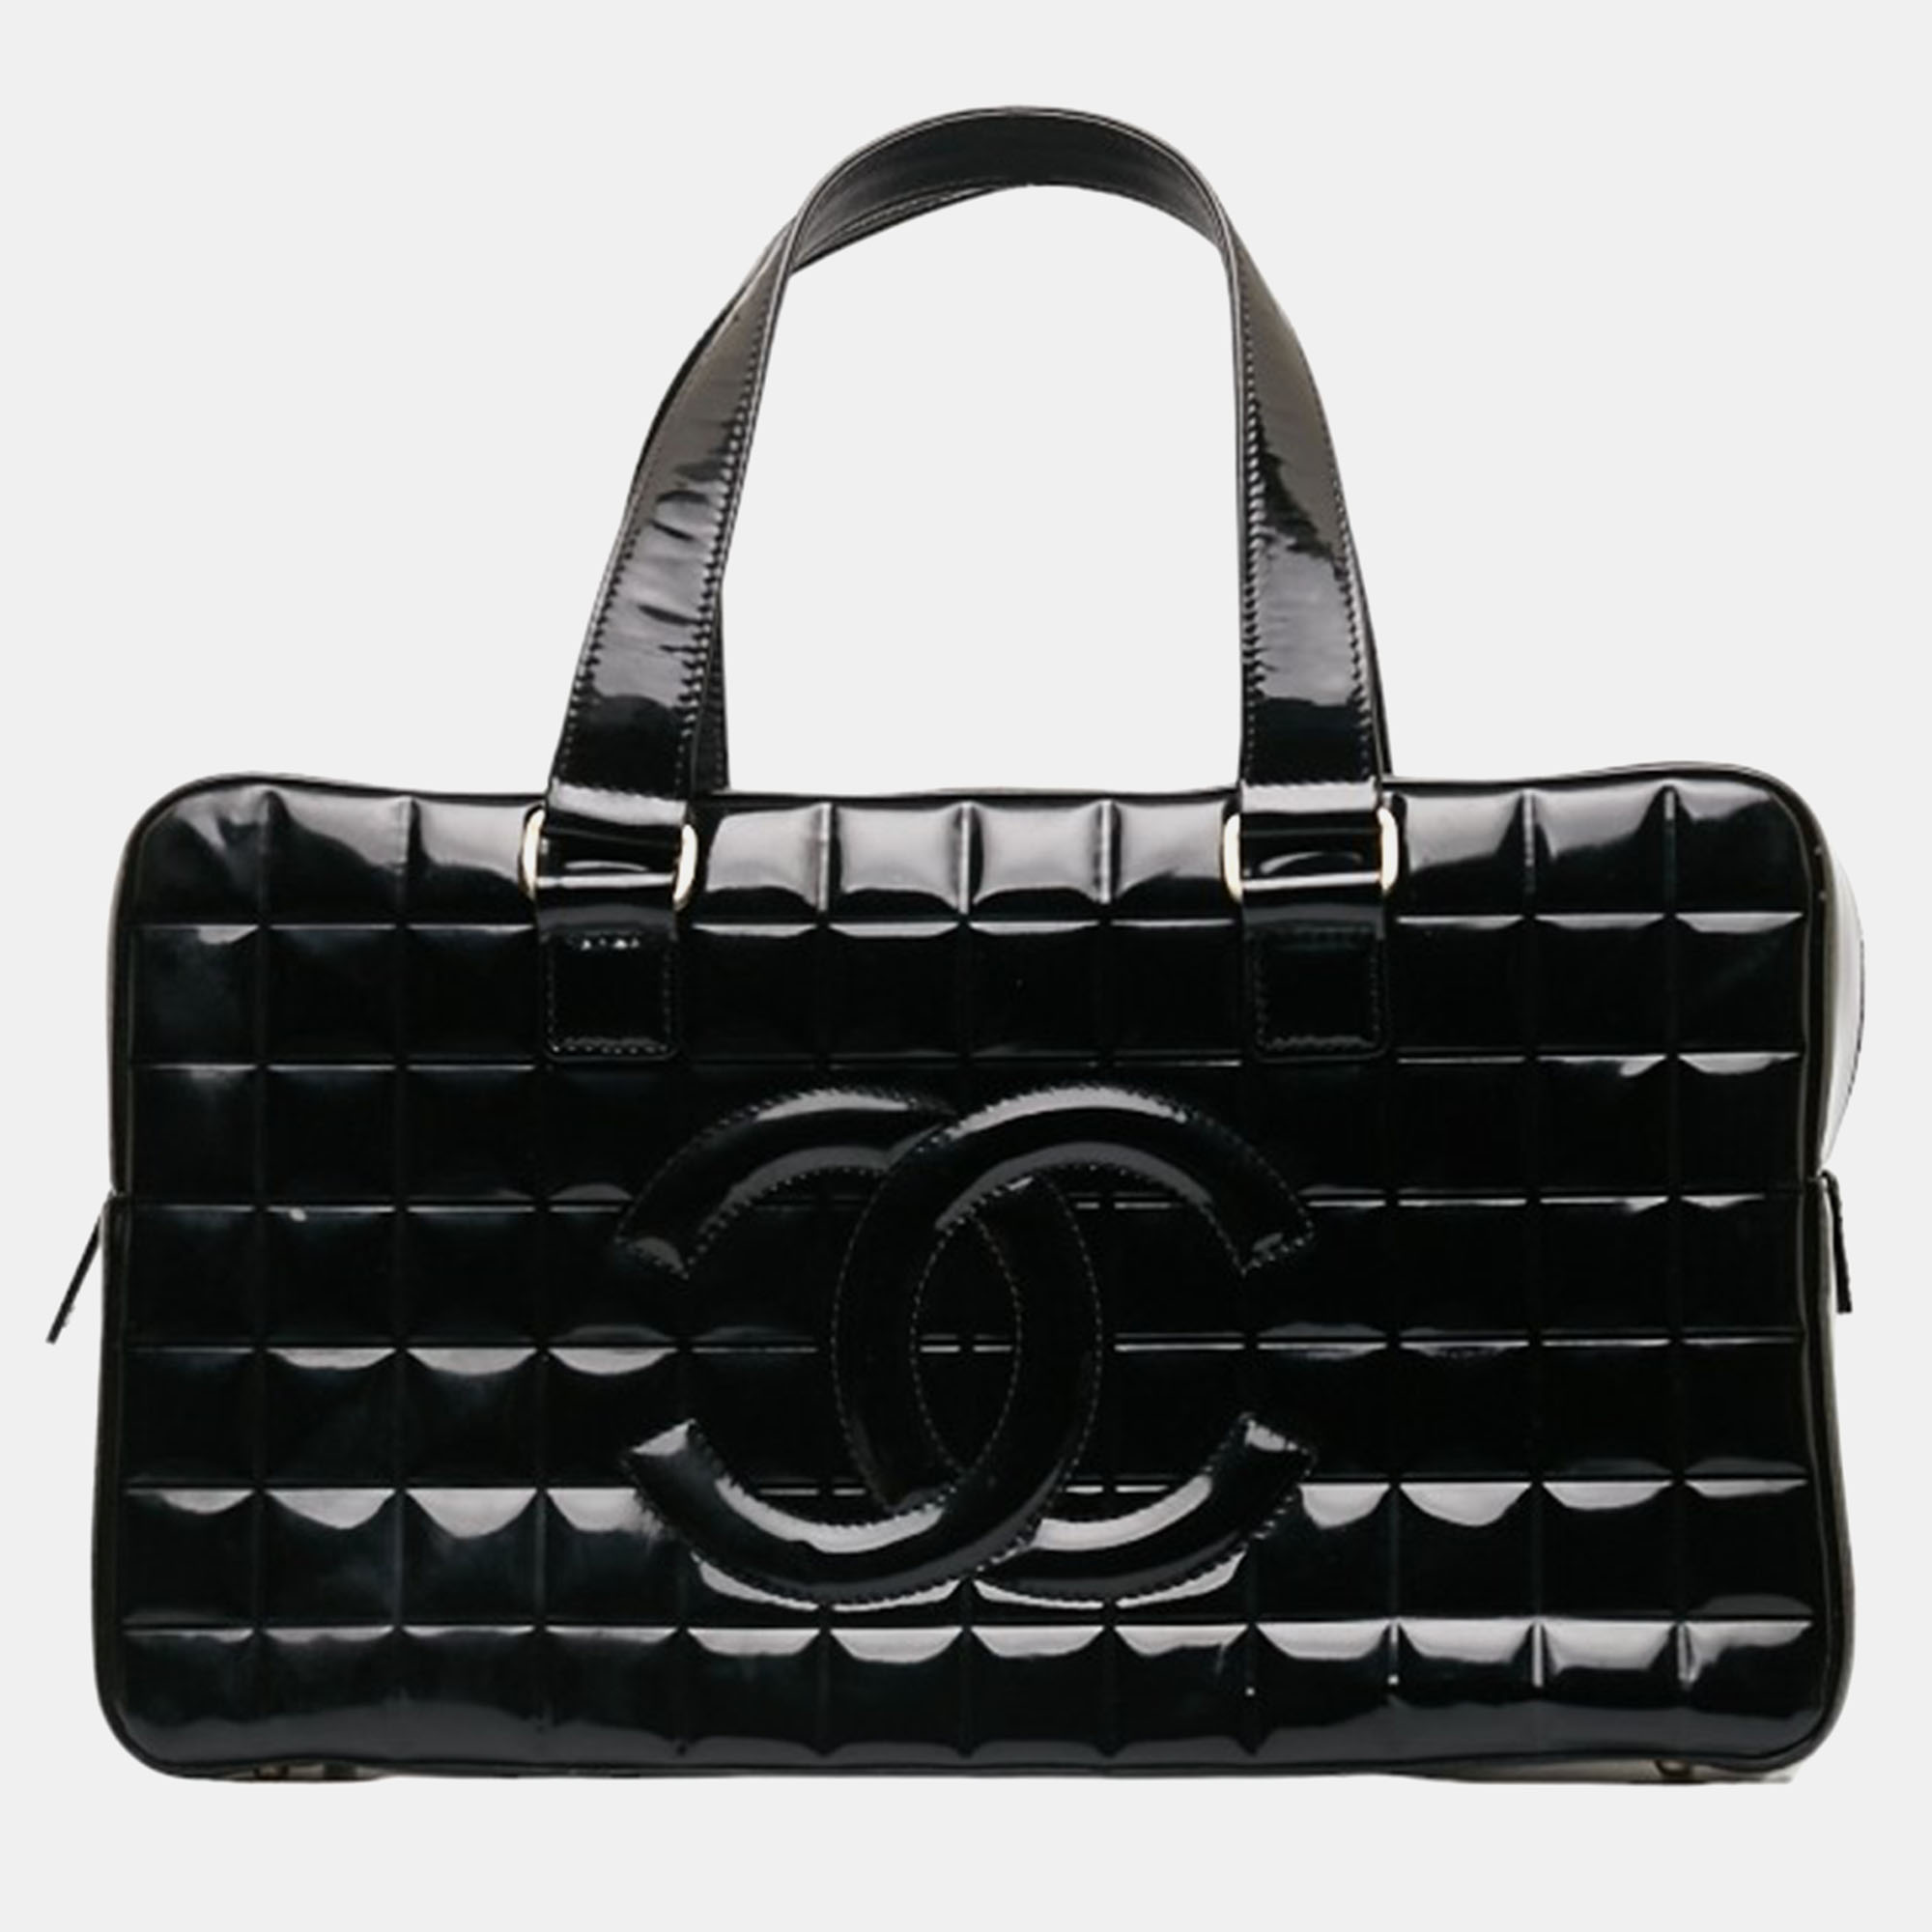 Chanel black patent leather square quilt boston bag